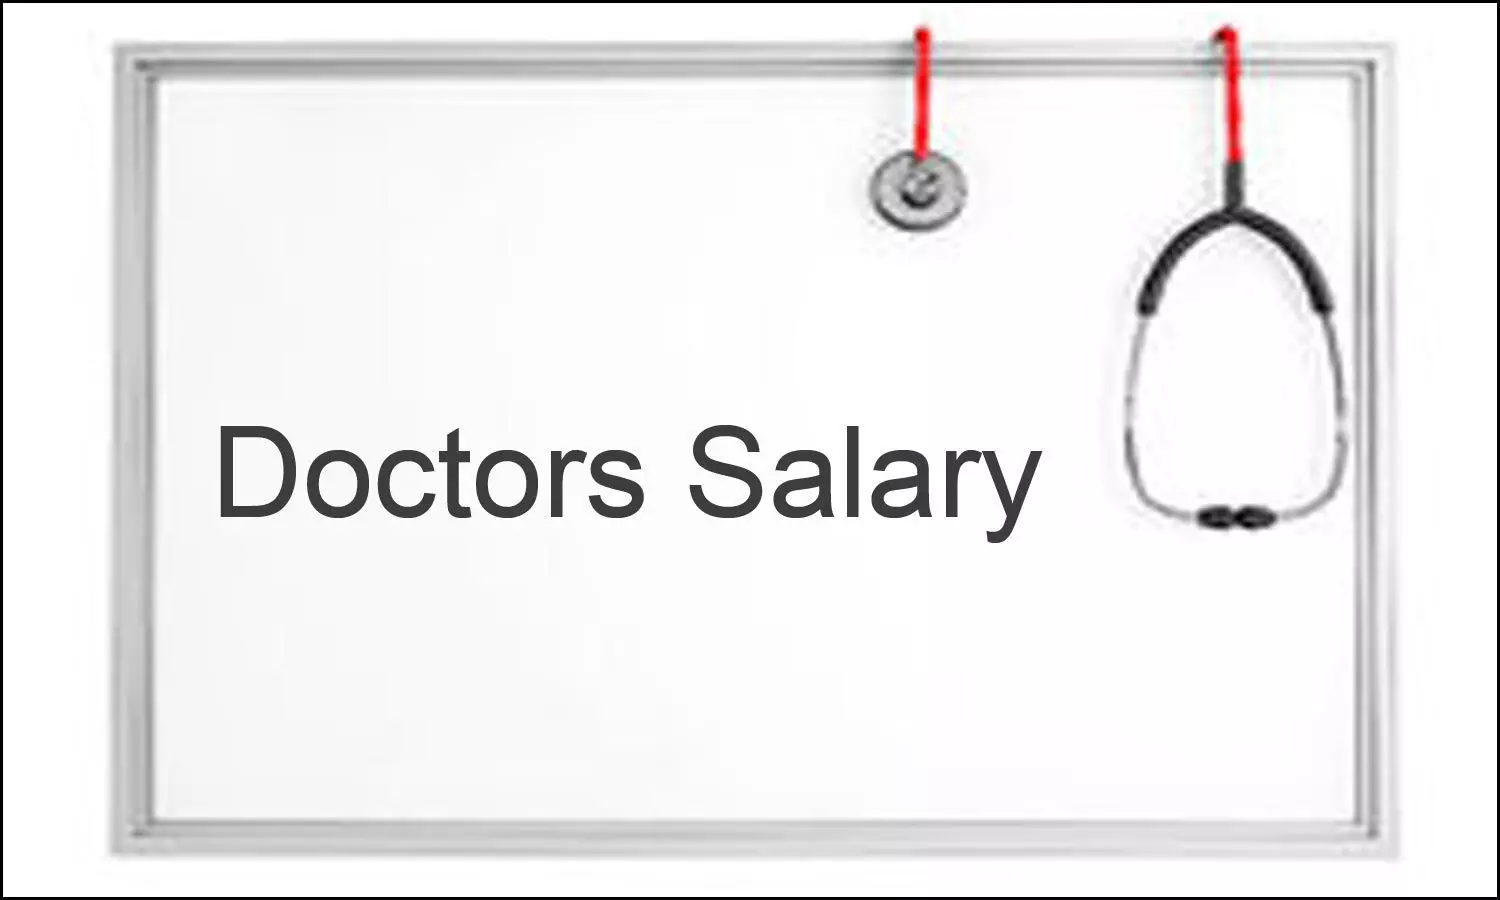 Delhi: Civic doctors write to PM Modi, seek intervention in salary issue